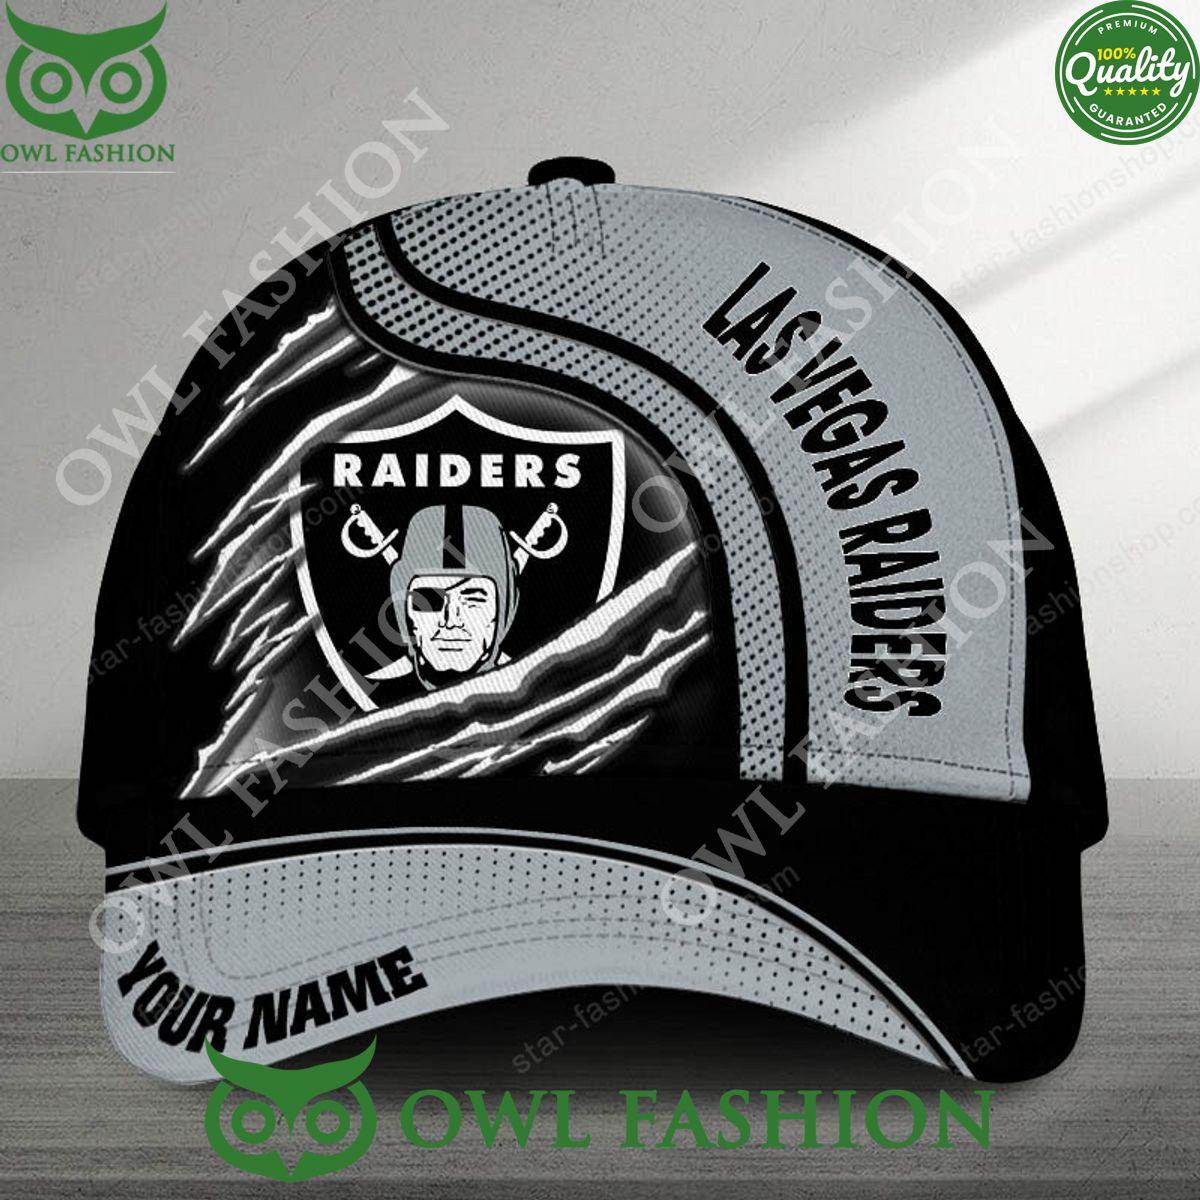 Customized NFL Las Vegas Raiders Printed Cap